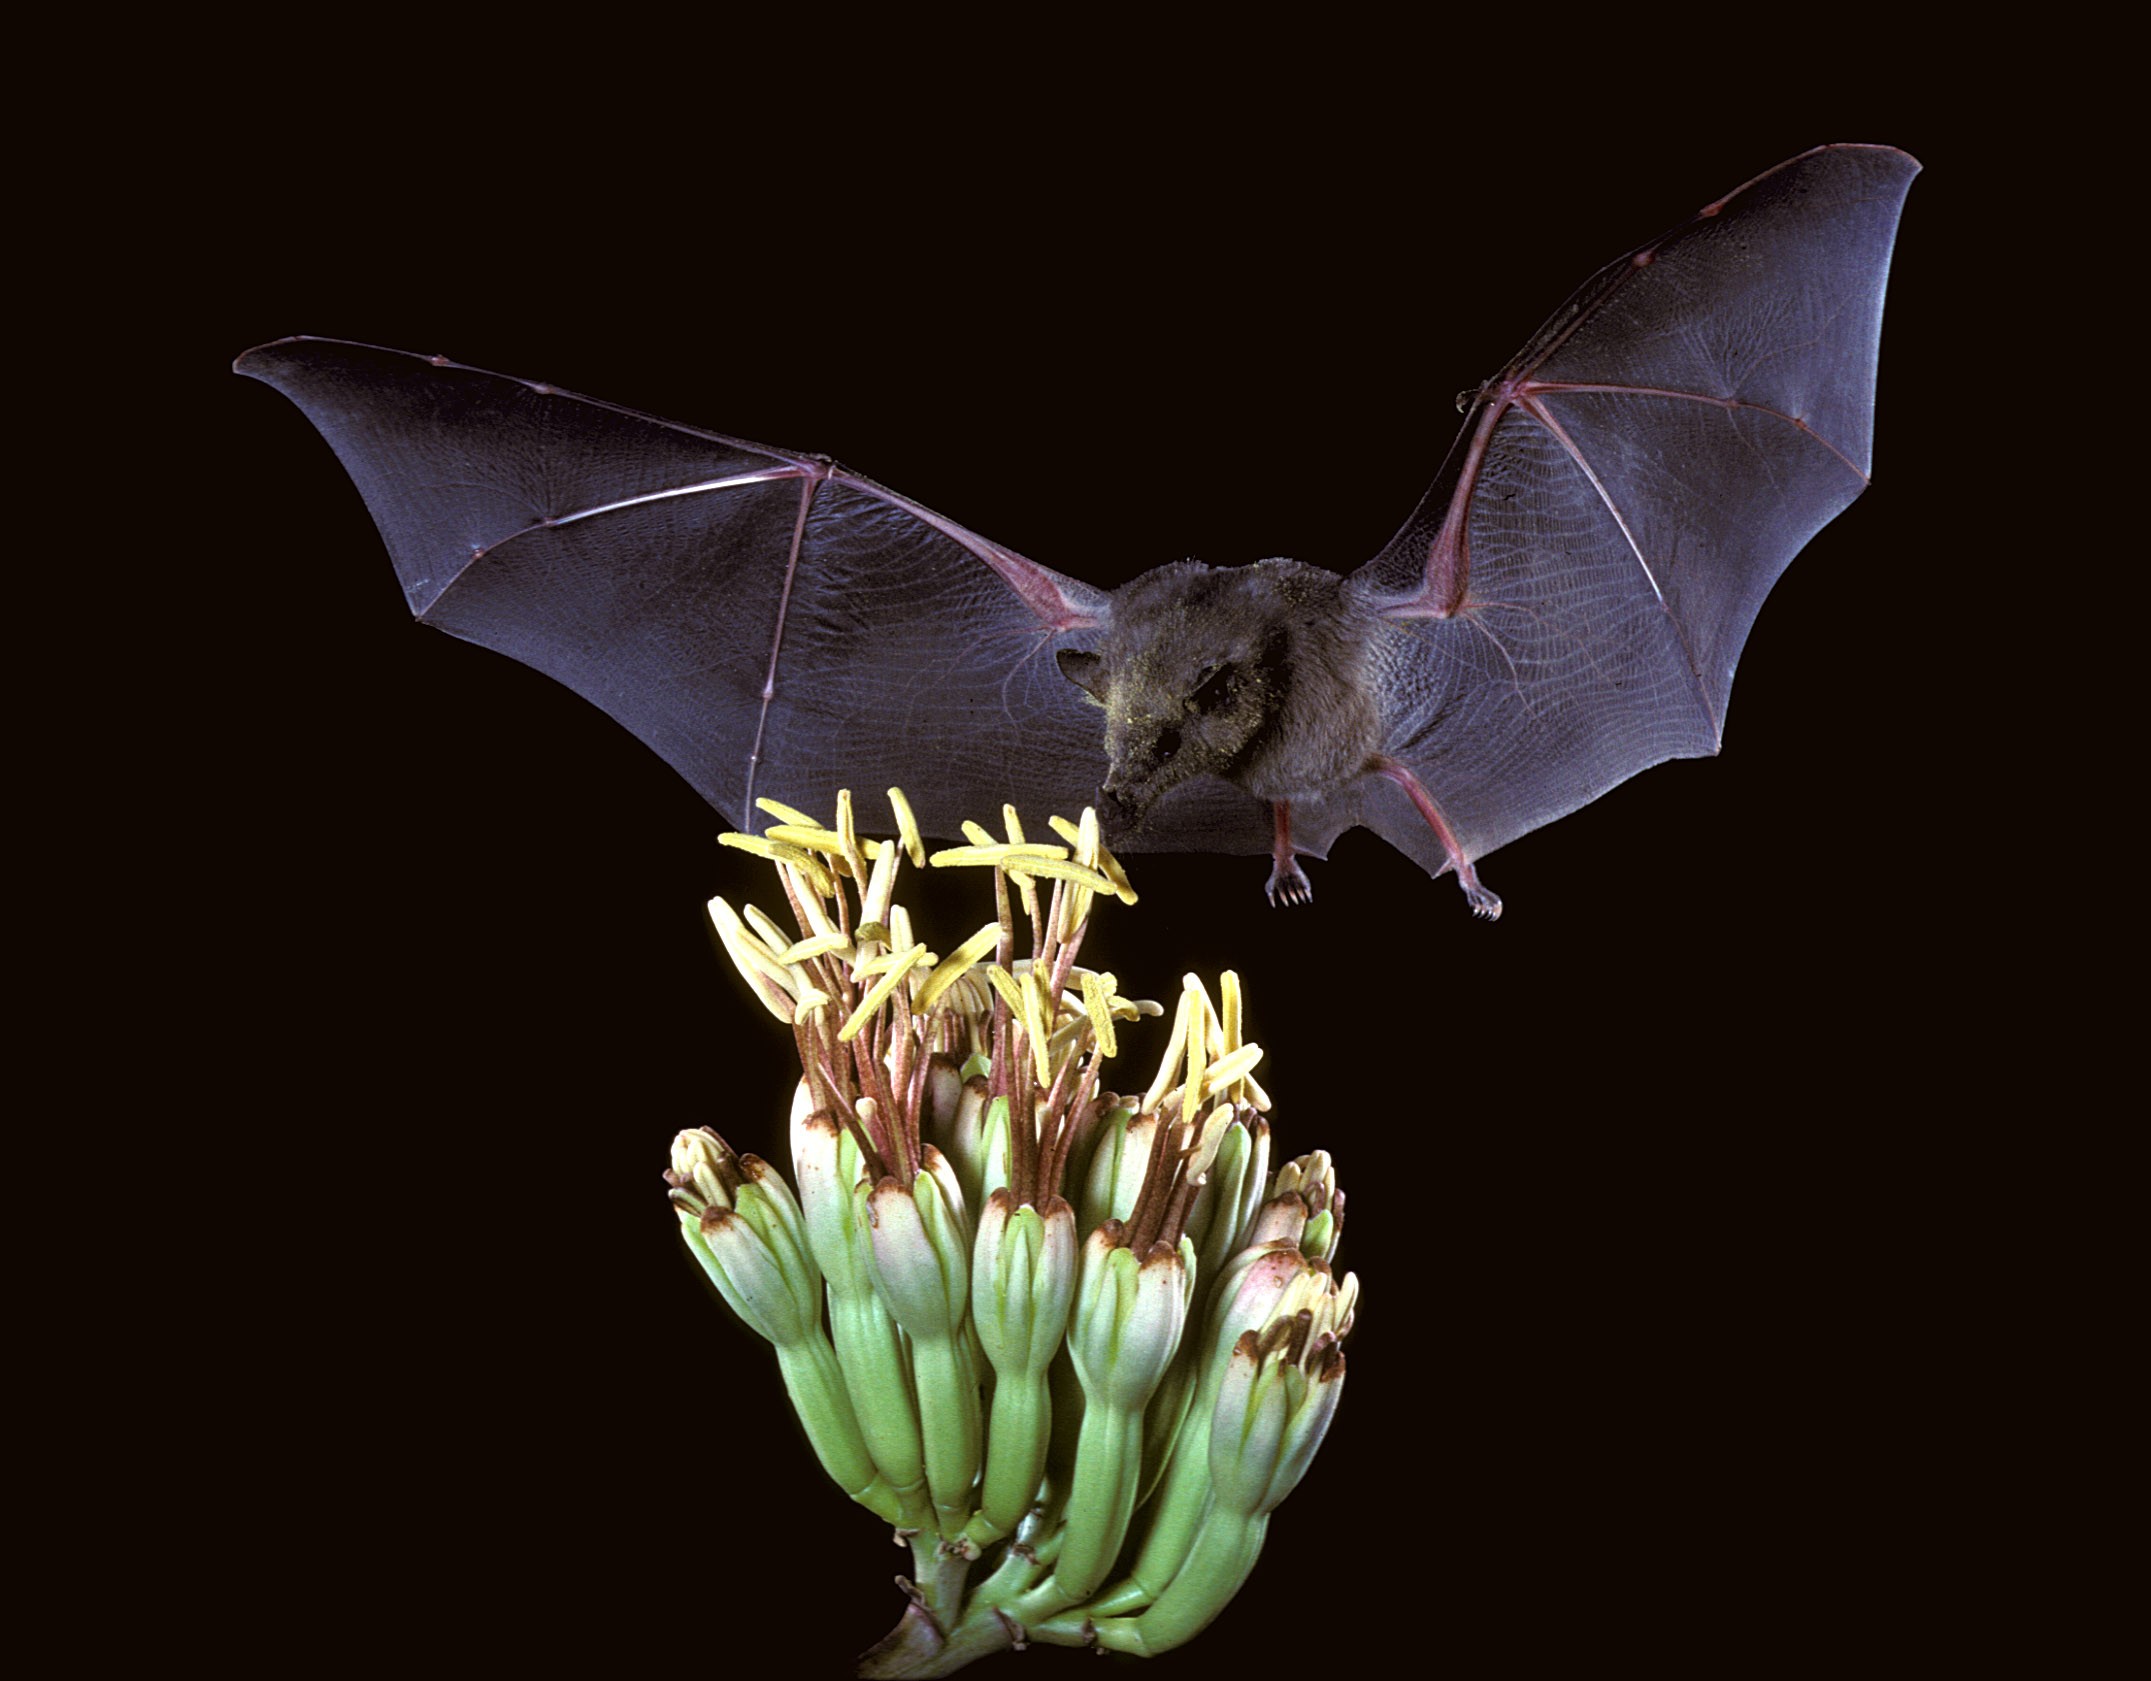 Bat - Wikipedia